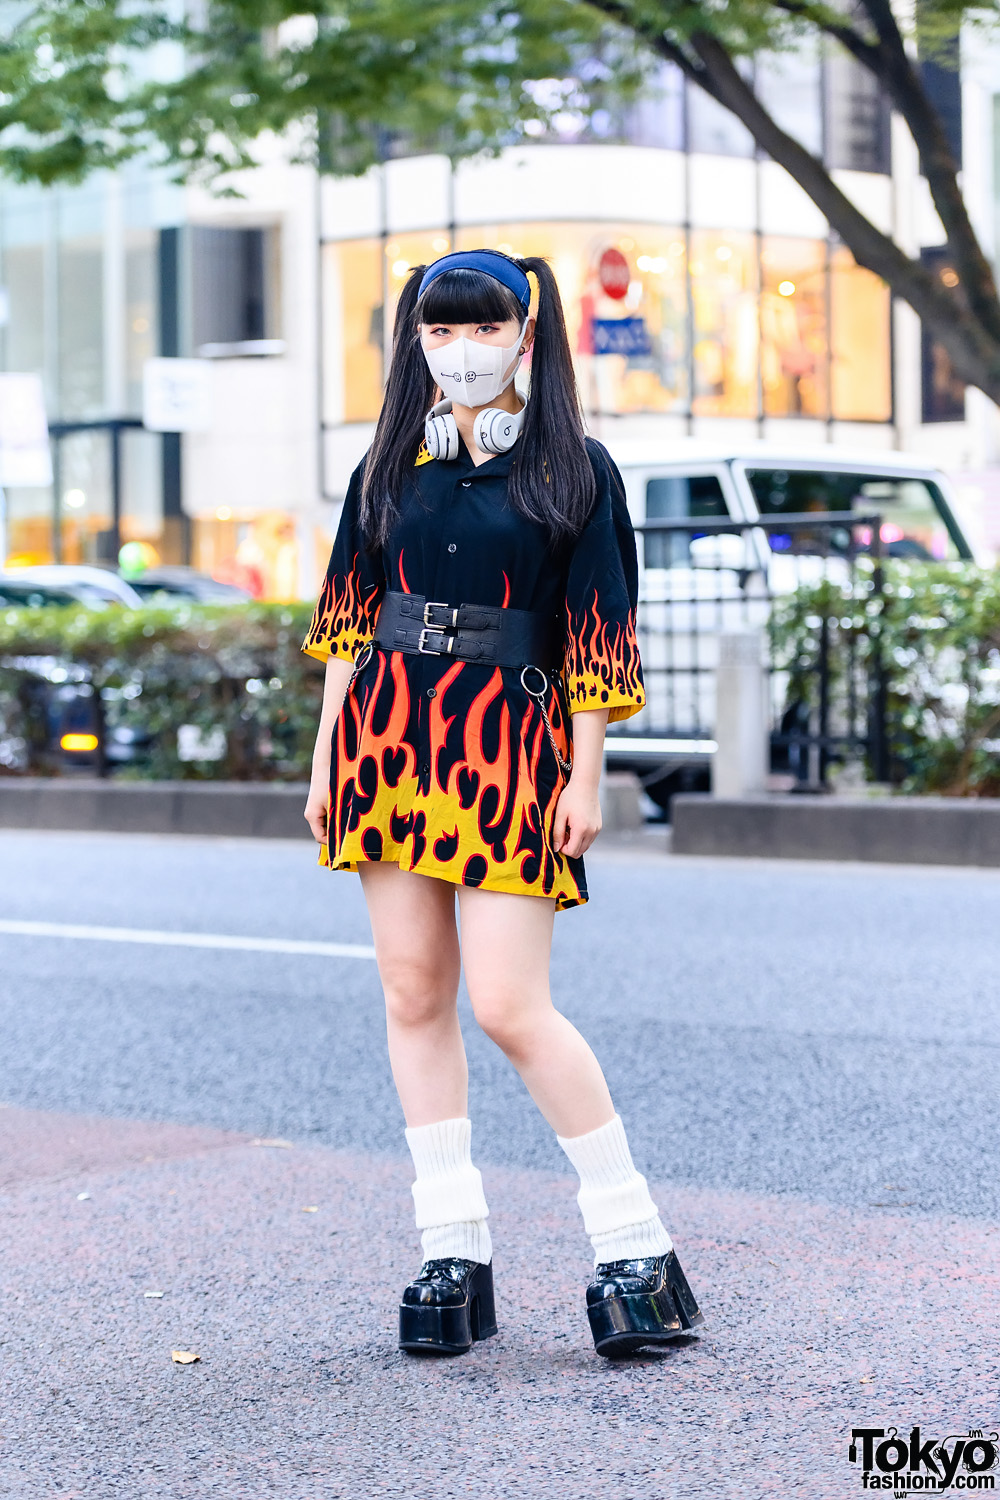 Twin Tails, Leg Warmers & Flames Harajuku Street Style w/ Beats by Dre Headphones, Never Mind the XU & Demonia Platforms